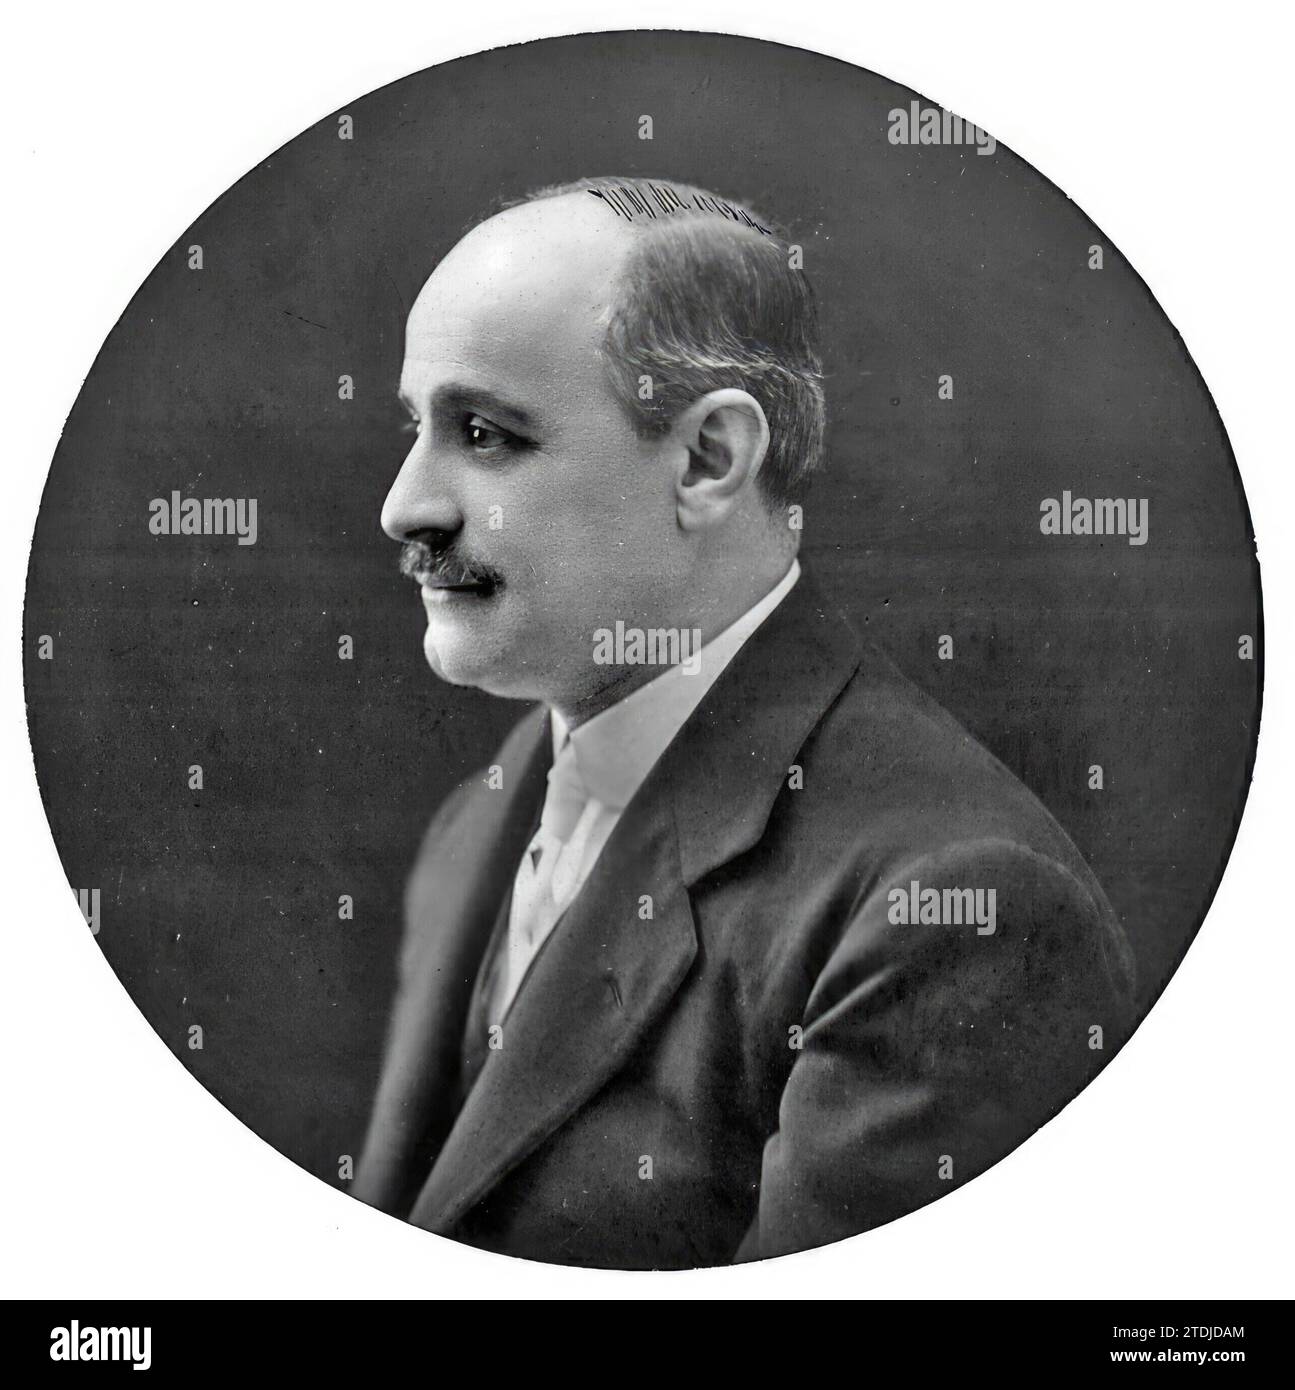 05/31/1912. Xavier Cabello Lapiedra, author of the Comedy 'Man Lives Not Alone on Bread' photo LV De Montano - Approximate date. Credit: Album / Archivo ABC Stock Photo